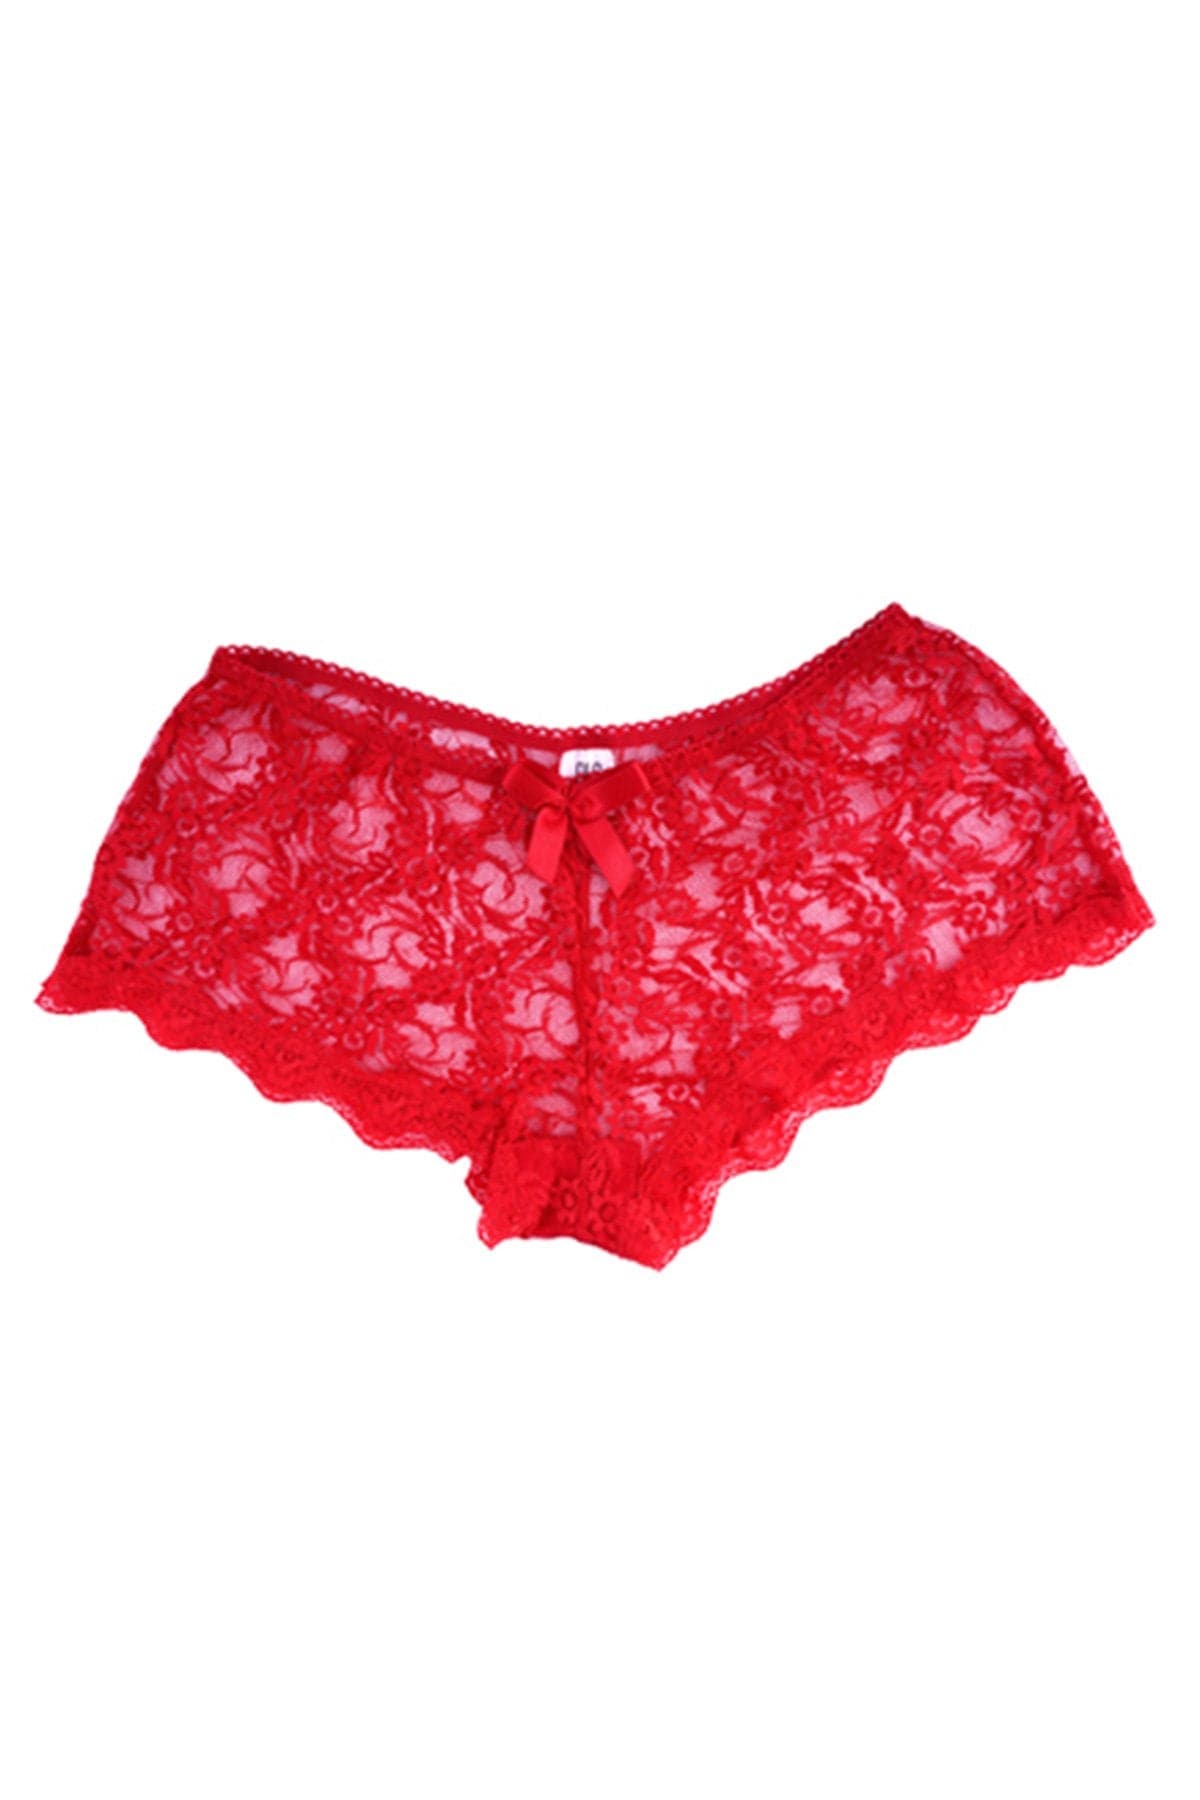 British Lingerie Studio Soraya Lace Boyshort - Red - Premium Panties from BLS - Just Rs 1250! Shop now at Cozmetica